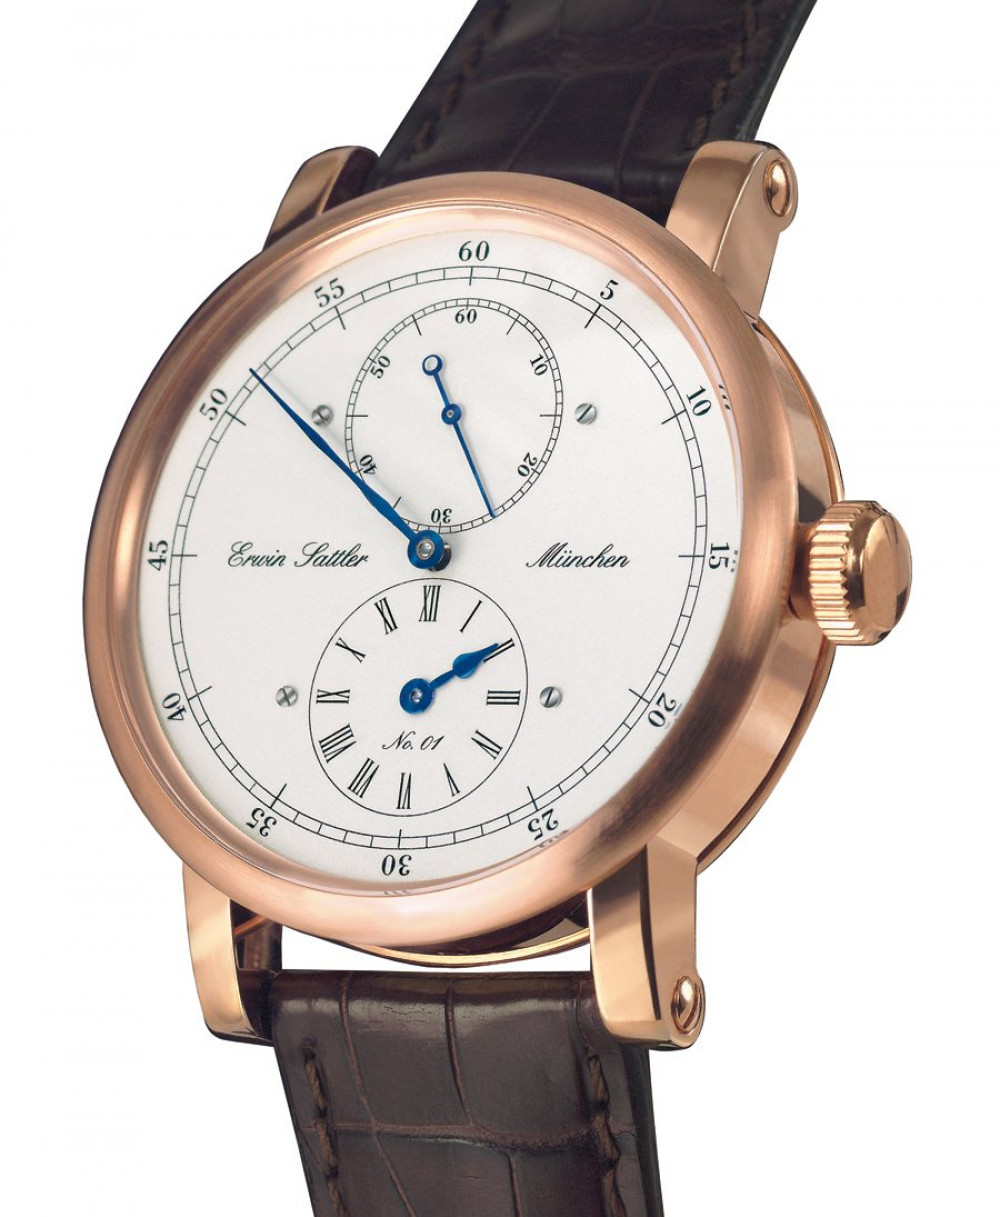 Zegarek firmy Erwin Sattler, model Regulateur Classica Secunda - Trilogie - 50 Jahre Sattler